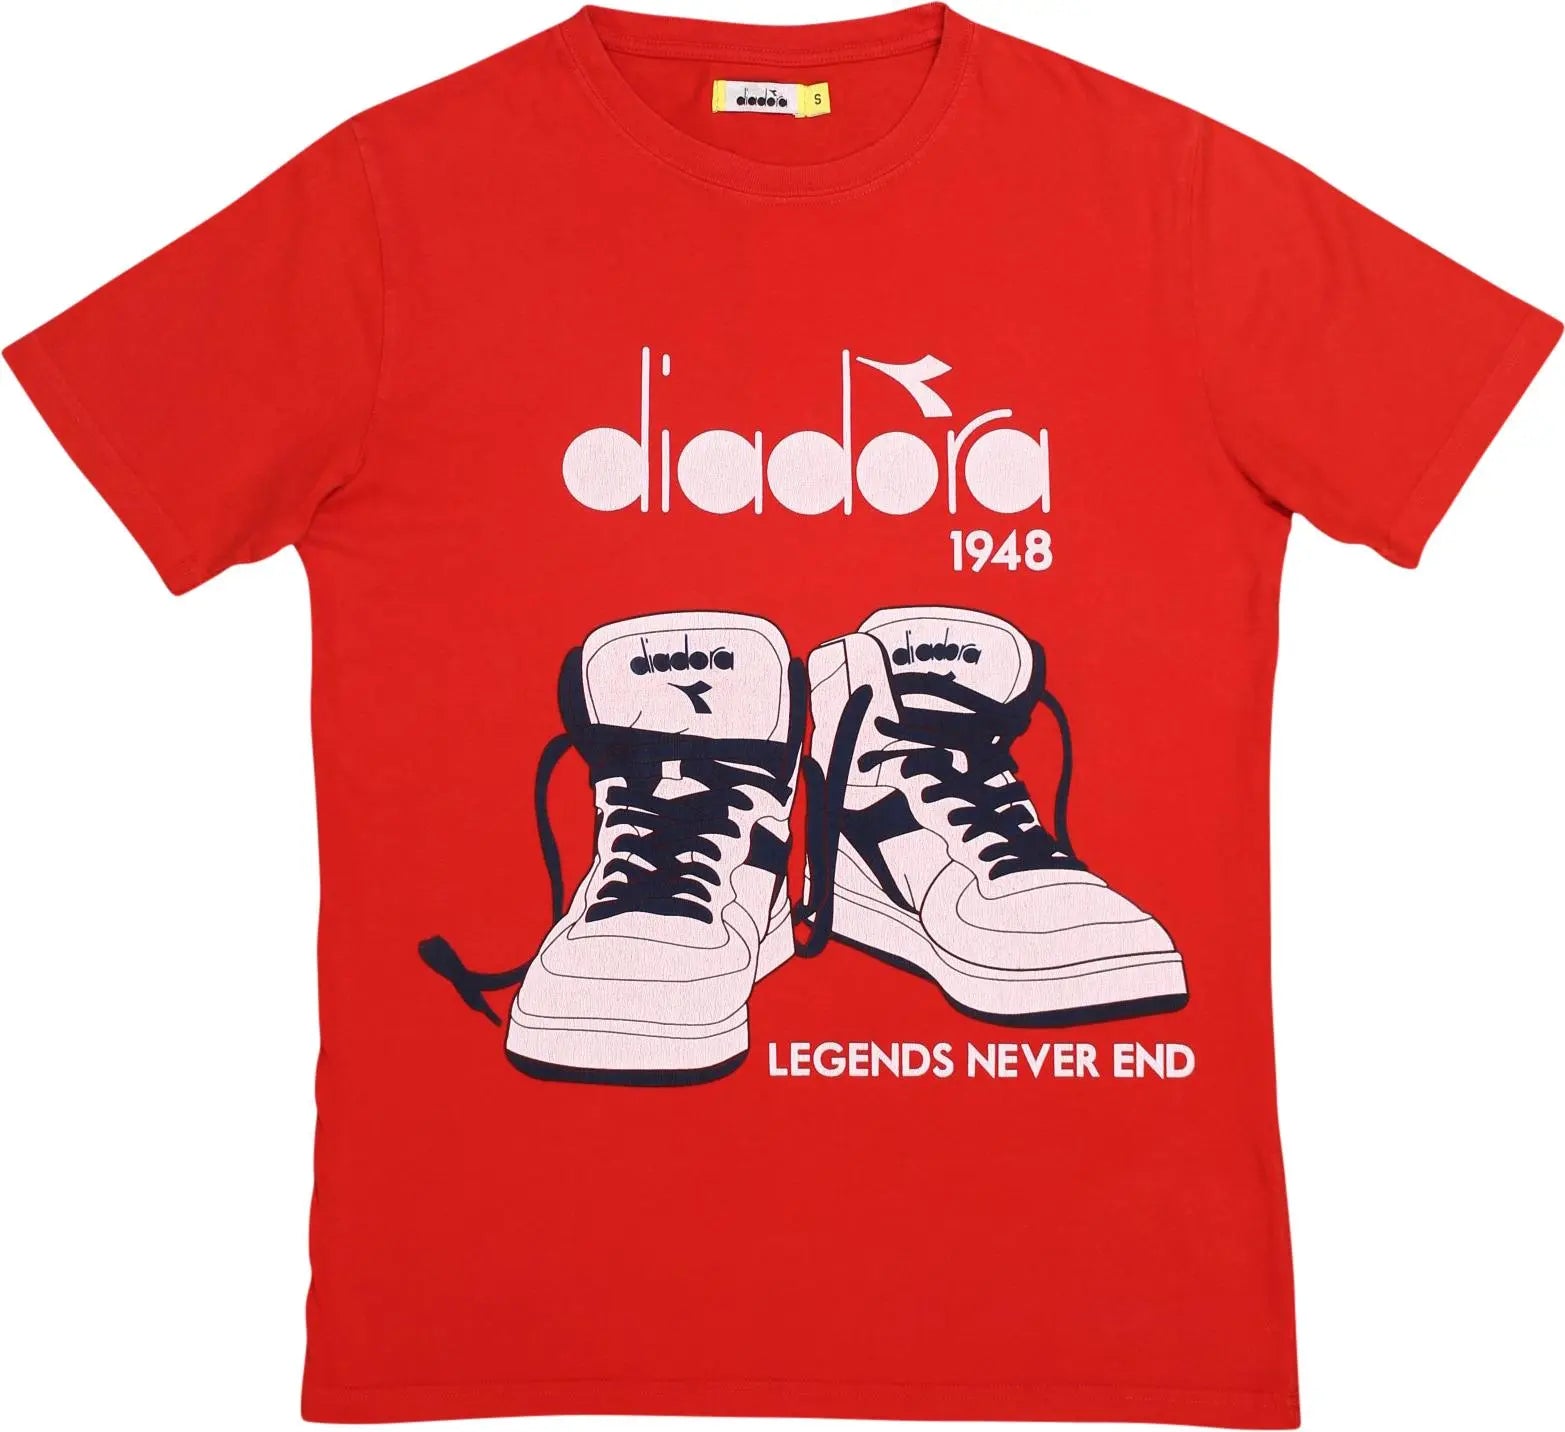 Diadora - Red T-shirt by Diadora- ThriftTale.com - Vintage and second handclothing